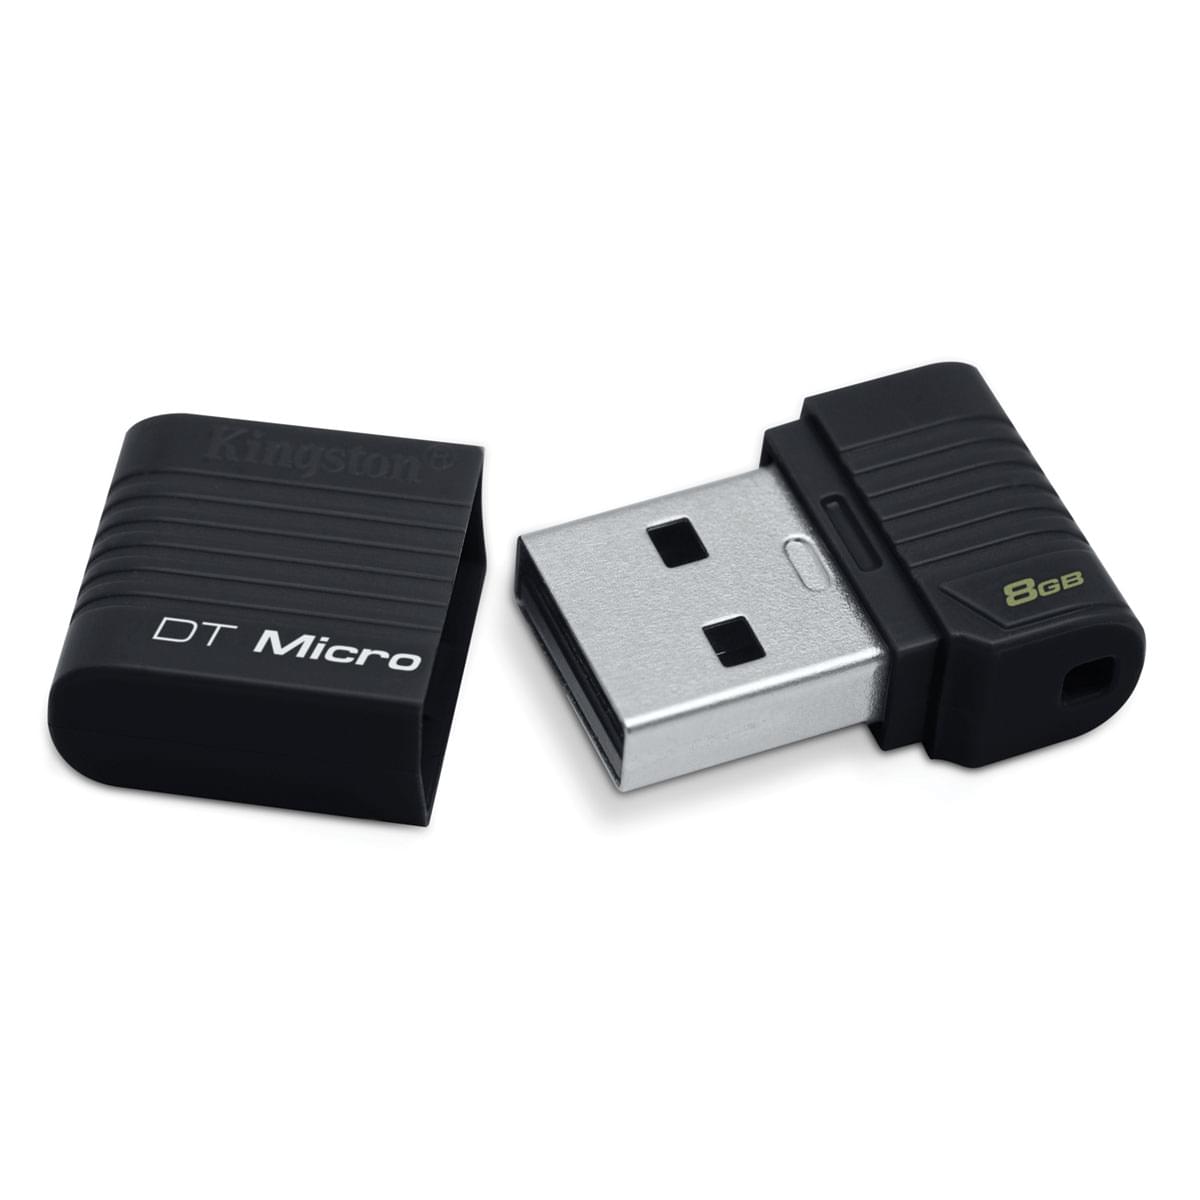 Kingston 8Go USB 2.0 Data Hi-Speed Micro Black DTMCK/8G - Clé USB - 0